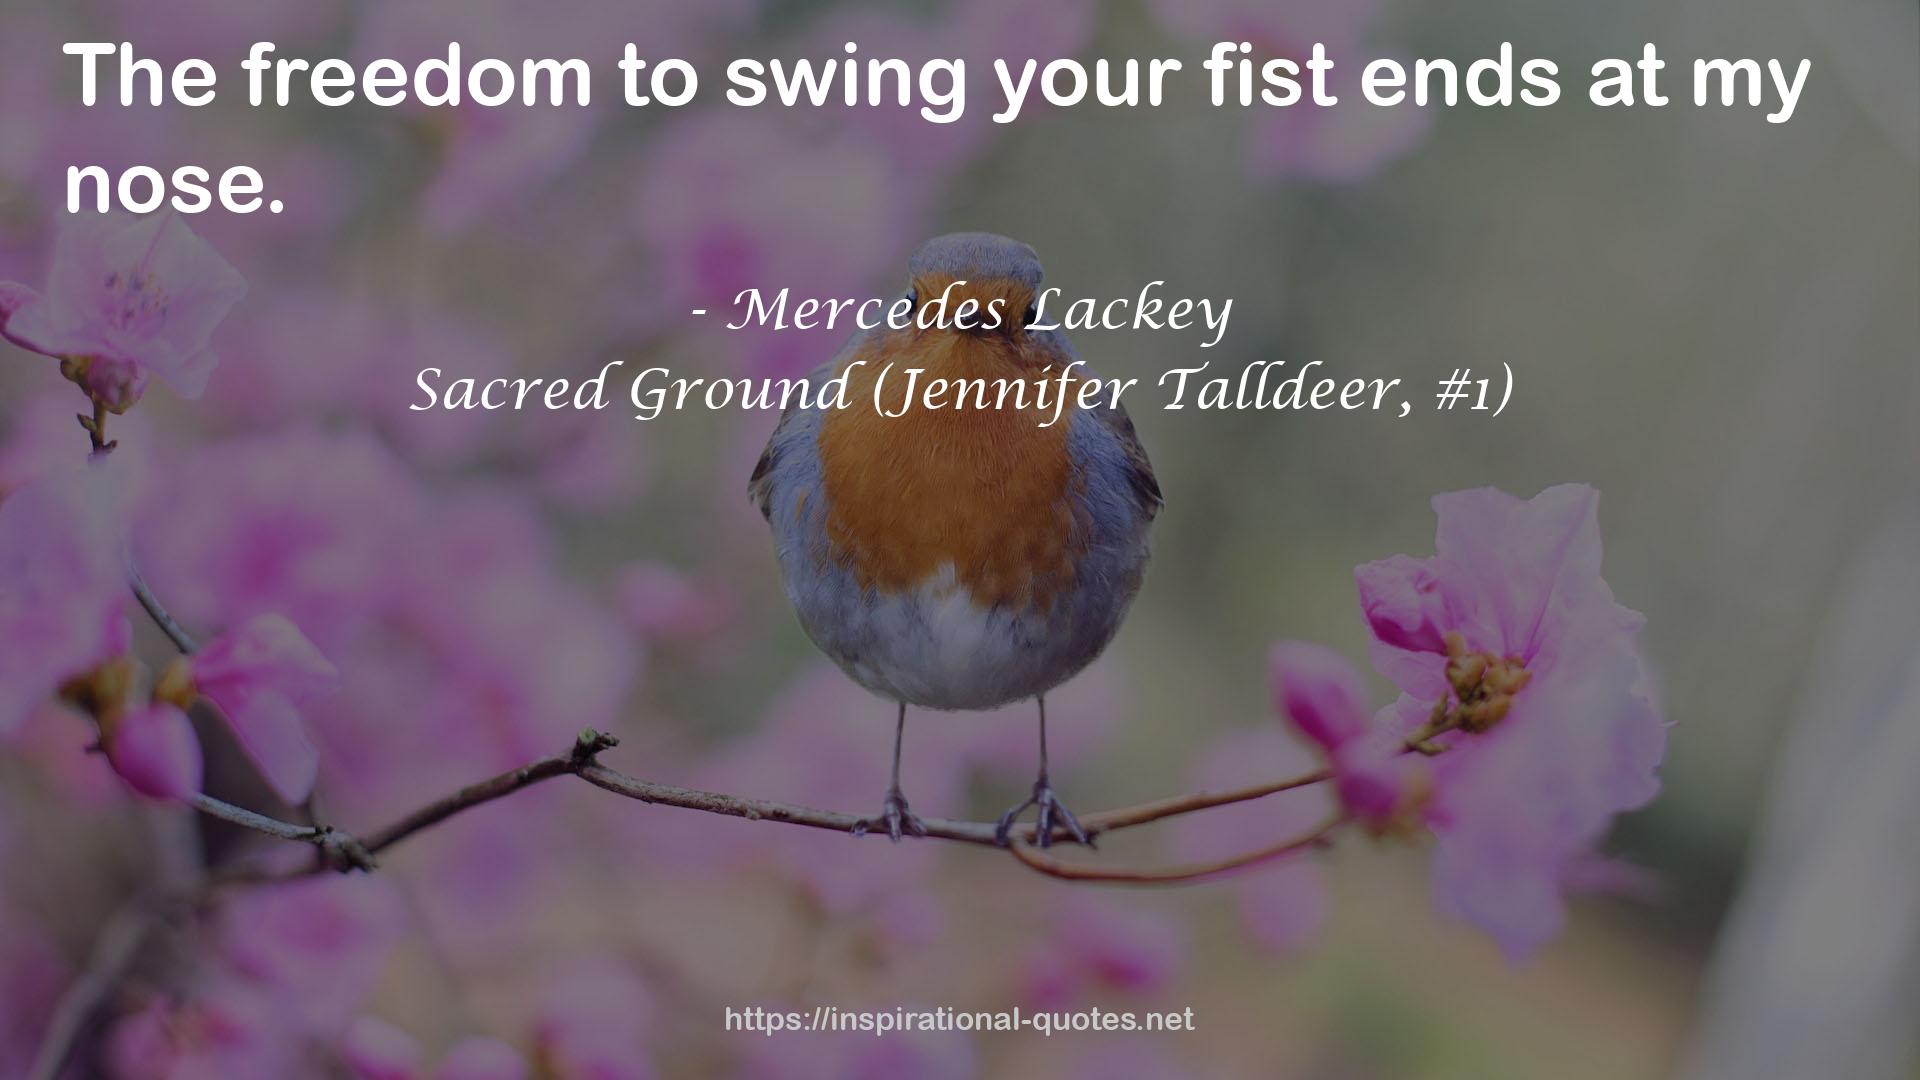 Sacred Ground (Jennifer Talldeer, #1) QUOTES